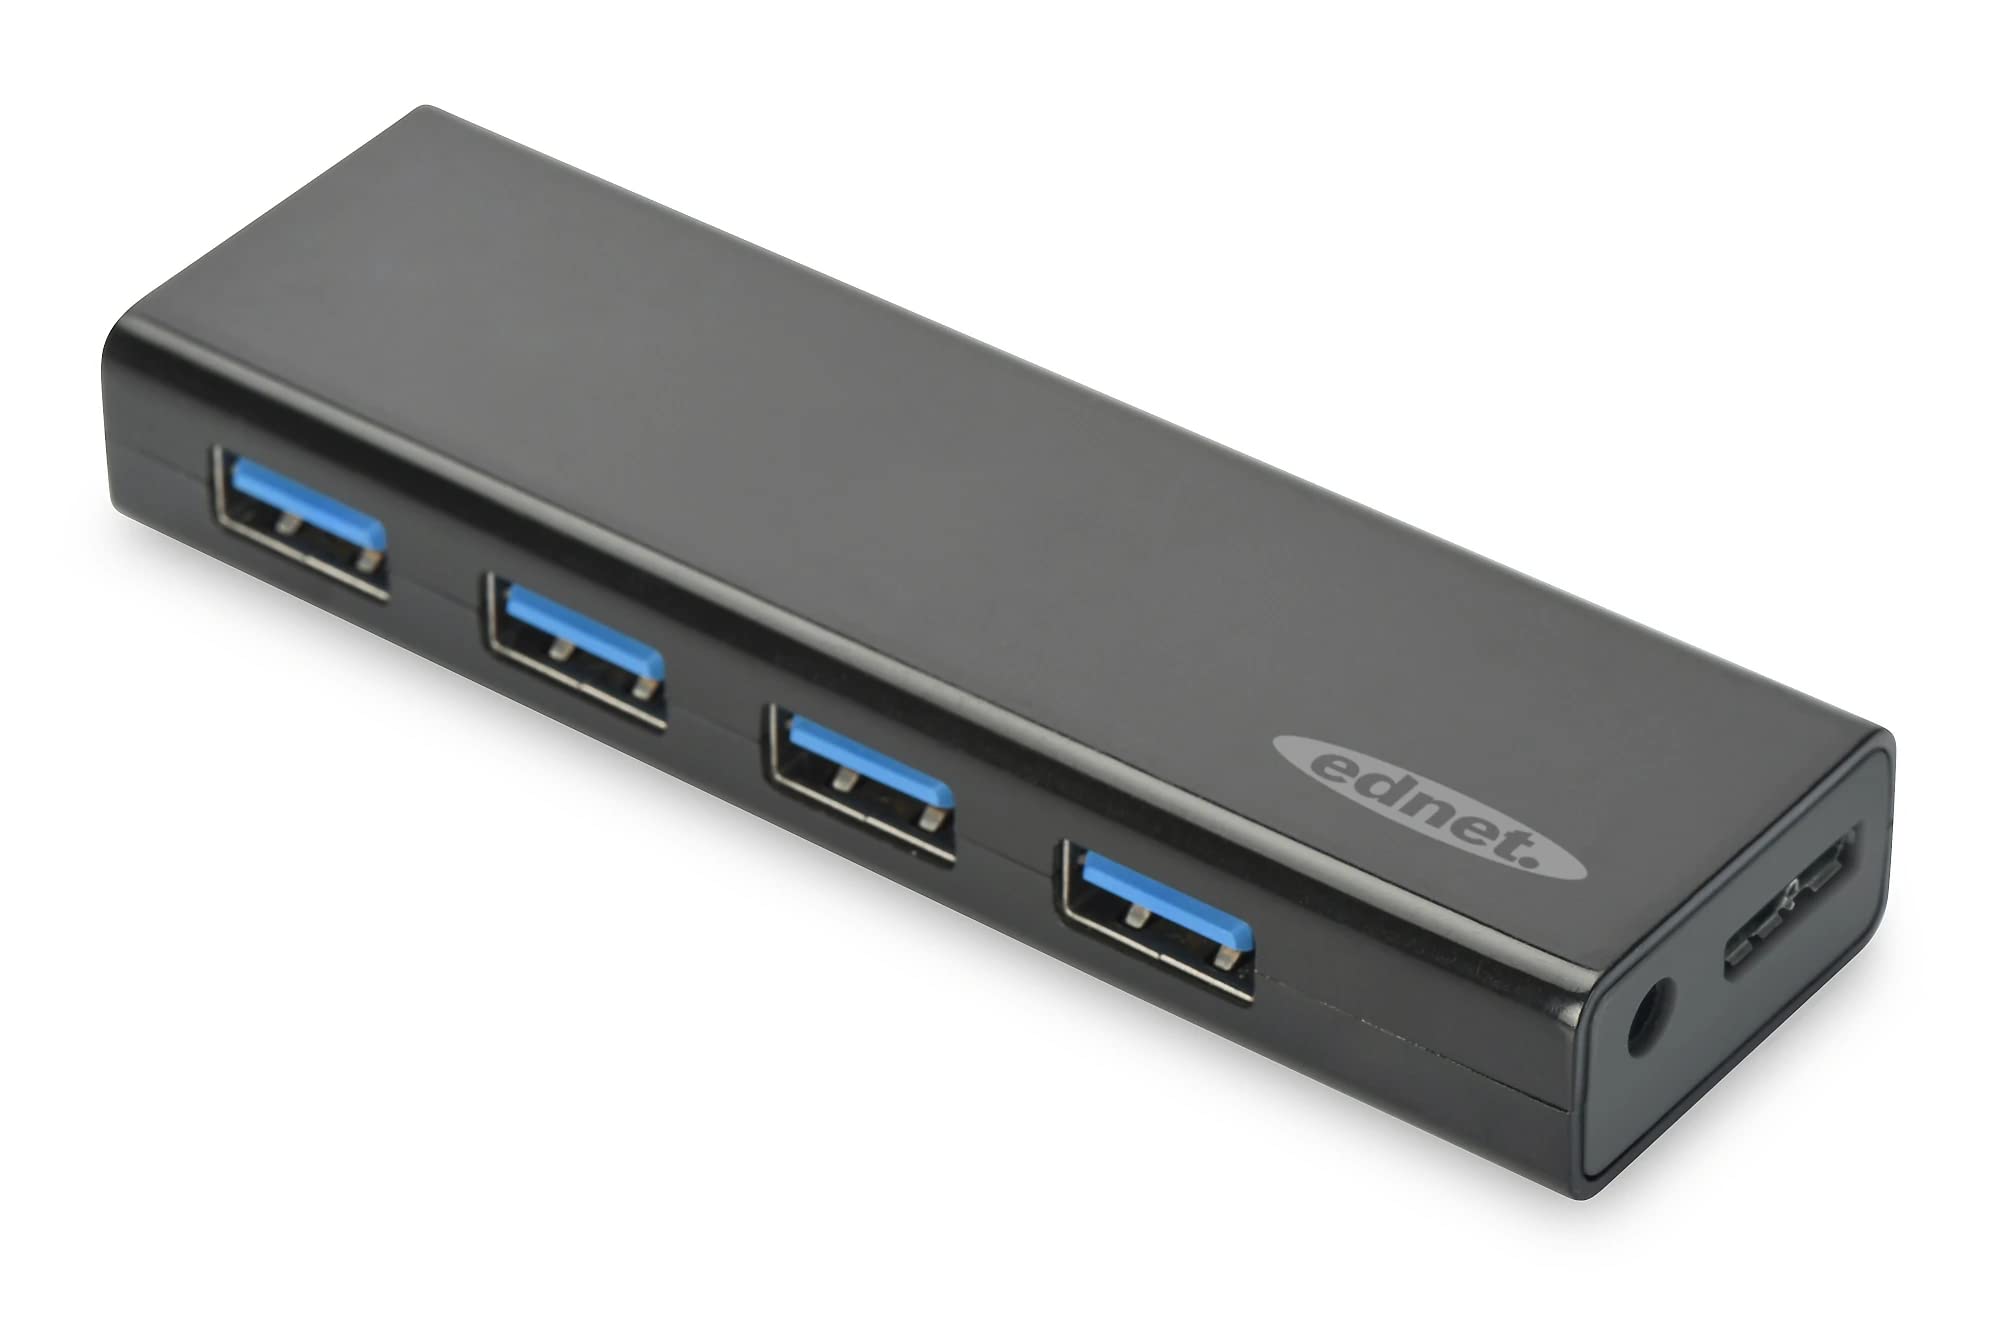 ednet 85155 USB 3 HUB, 4-Port, Datentransfer bis zu 5GB, 5V/2A Netzteil, schwarz